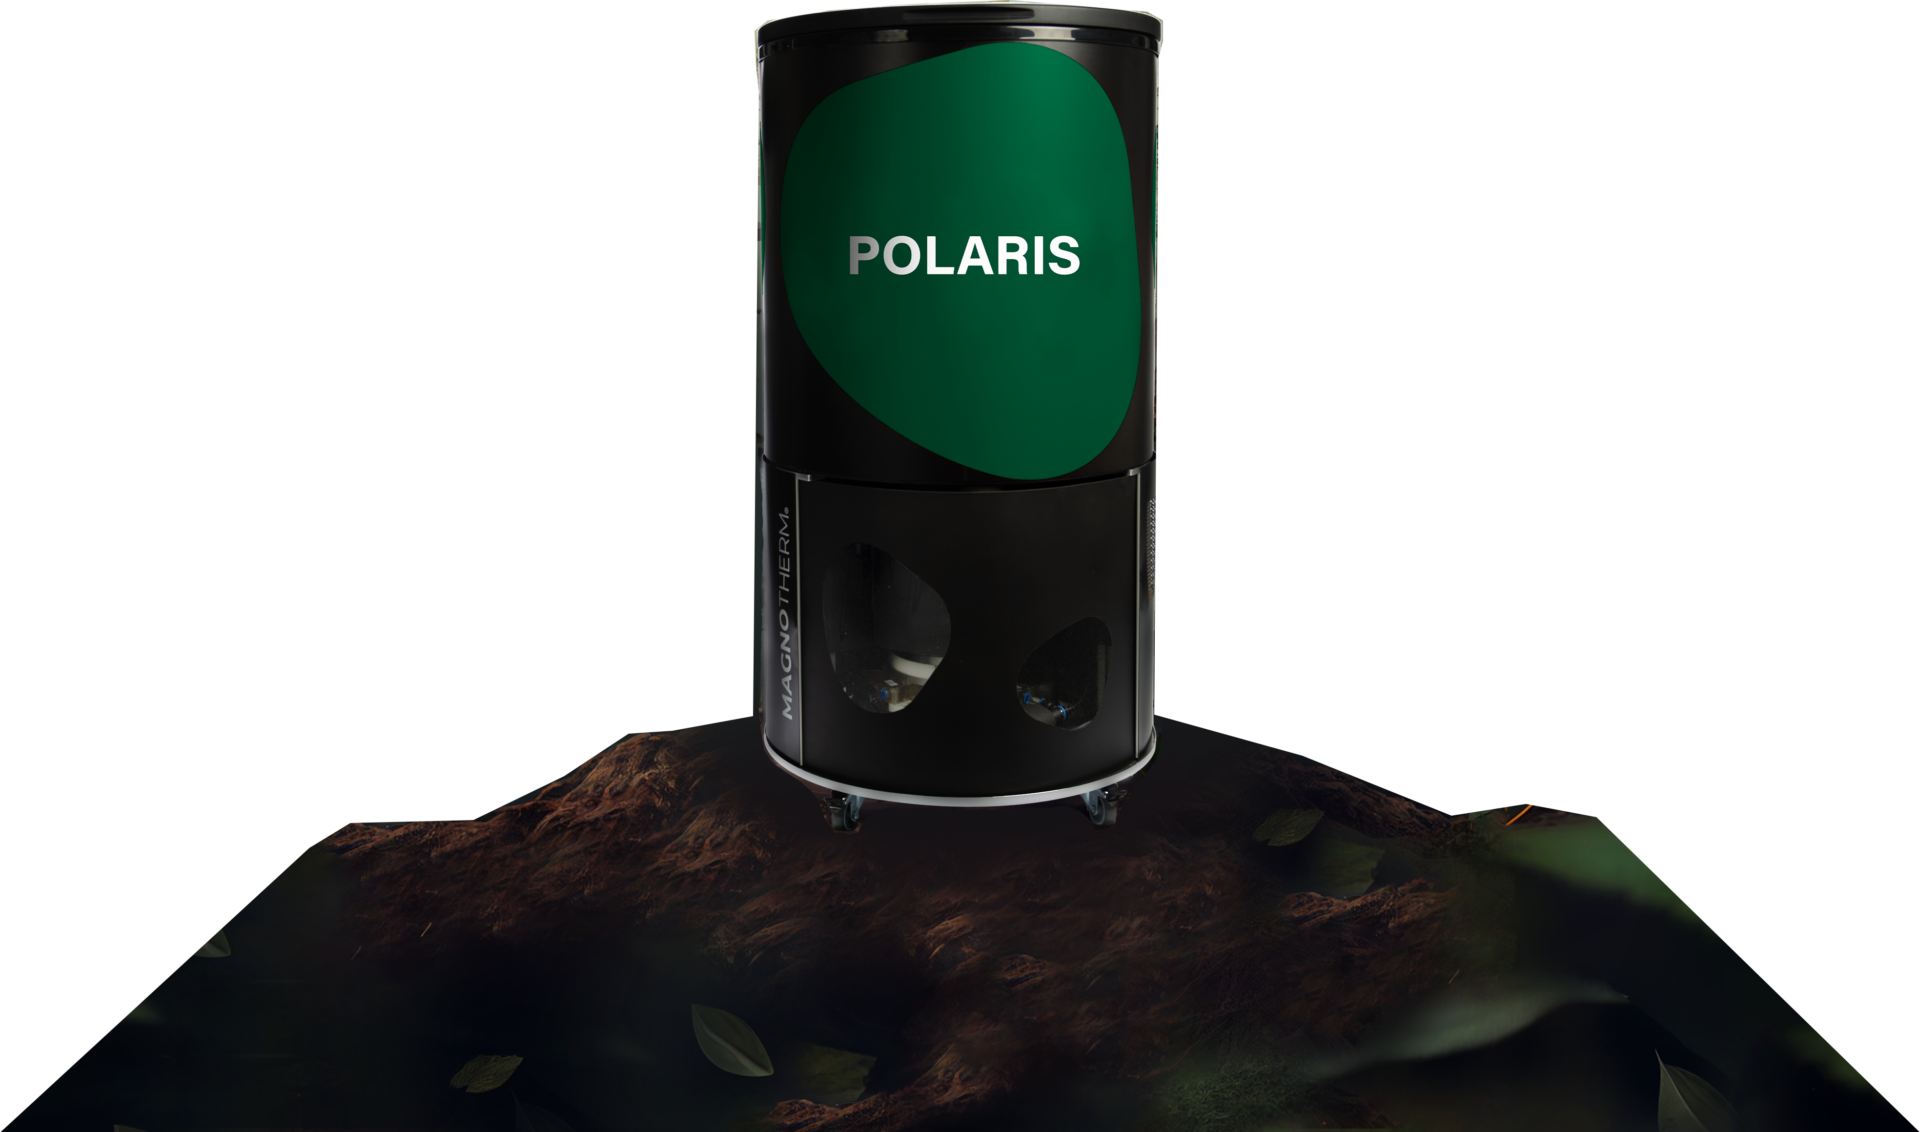 POLARIS – The magnetic beverage cooler